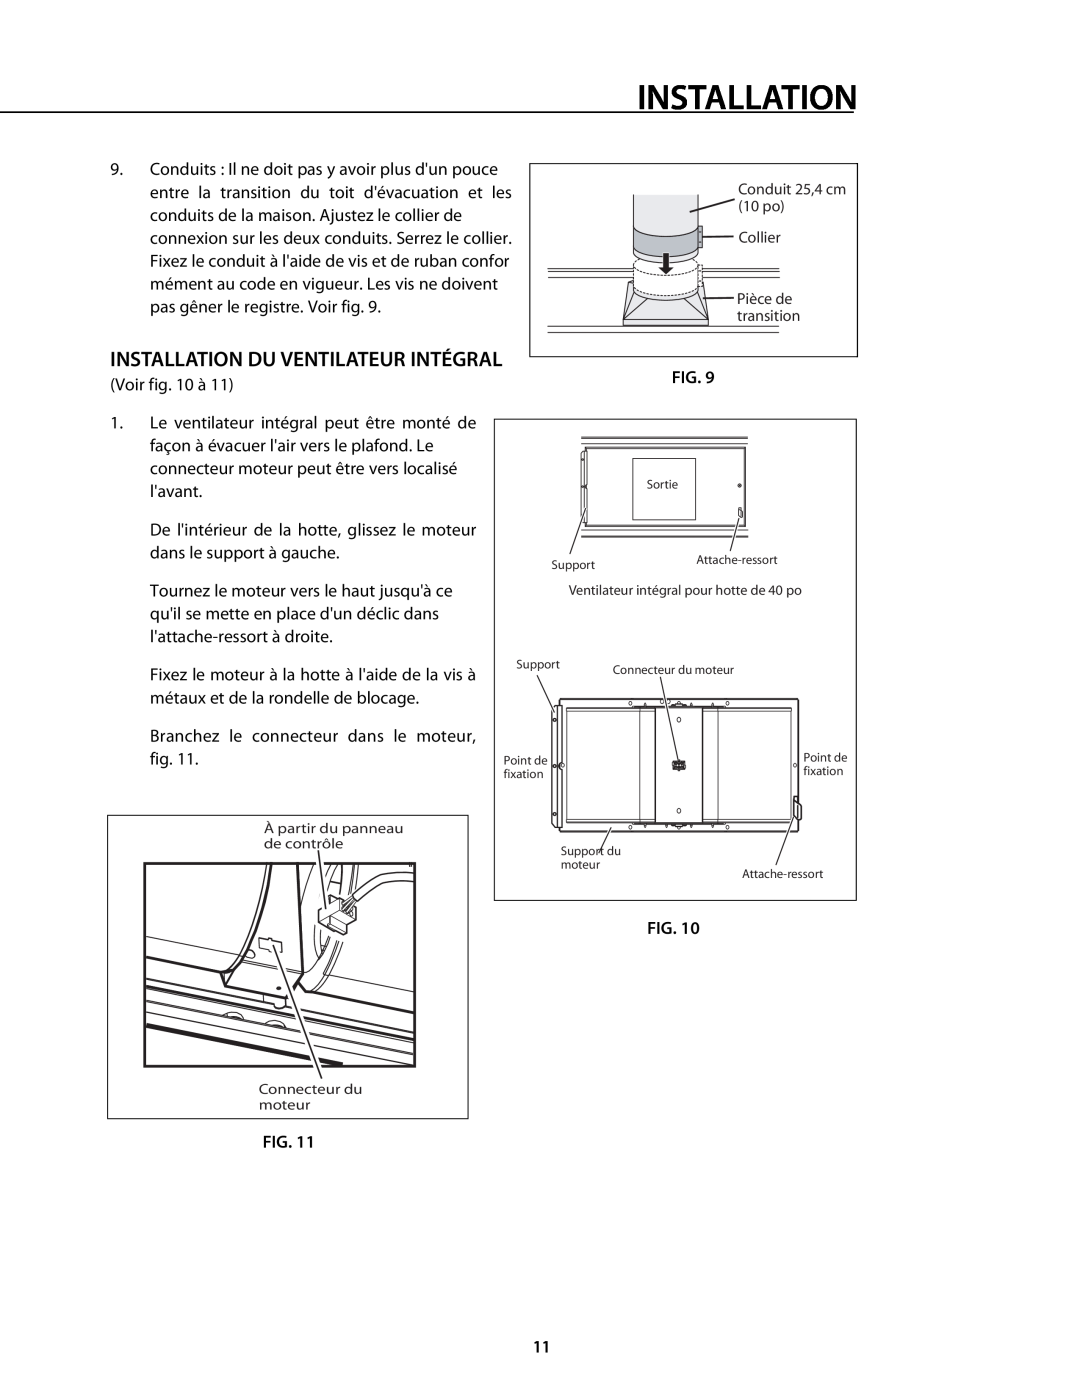 DCS 221712 manual Installation Du Ventilateur Intégral 